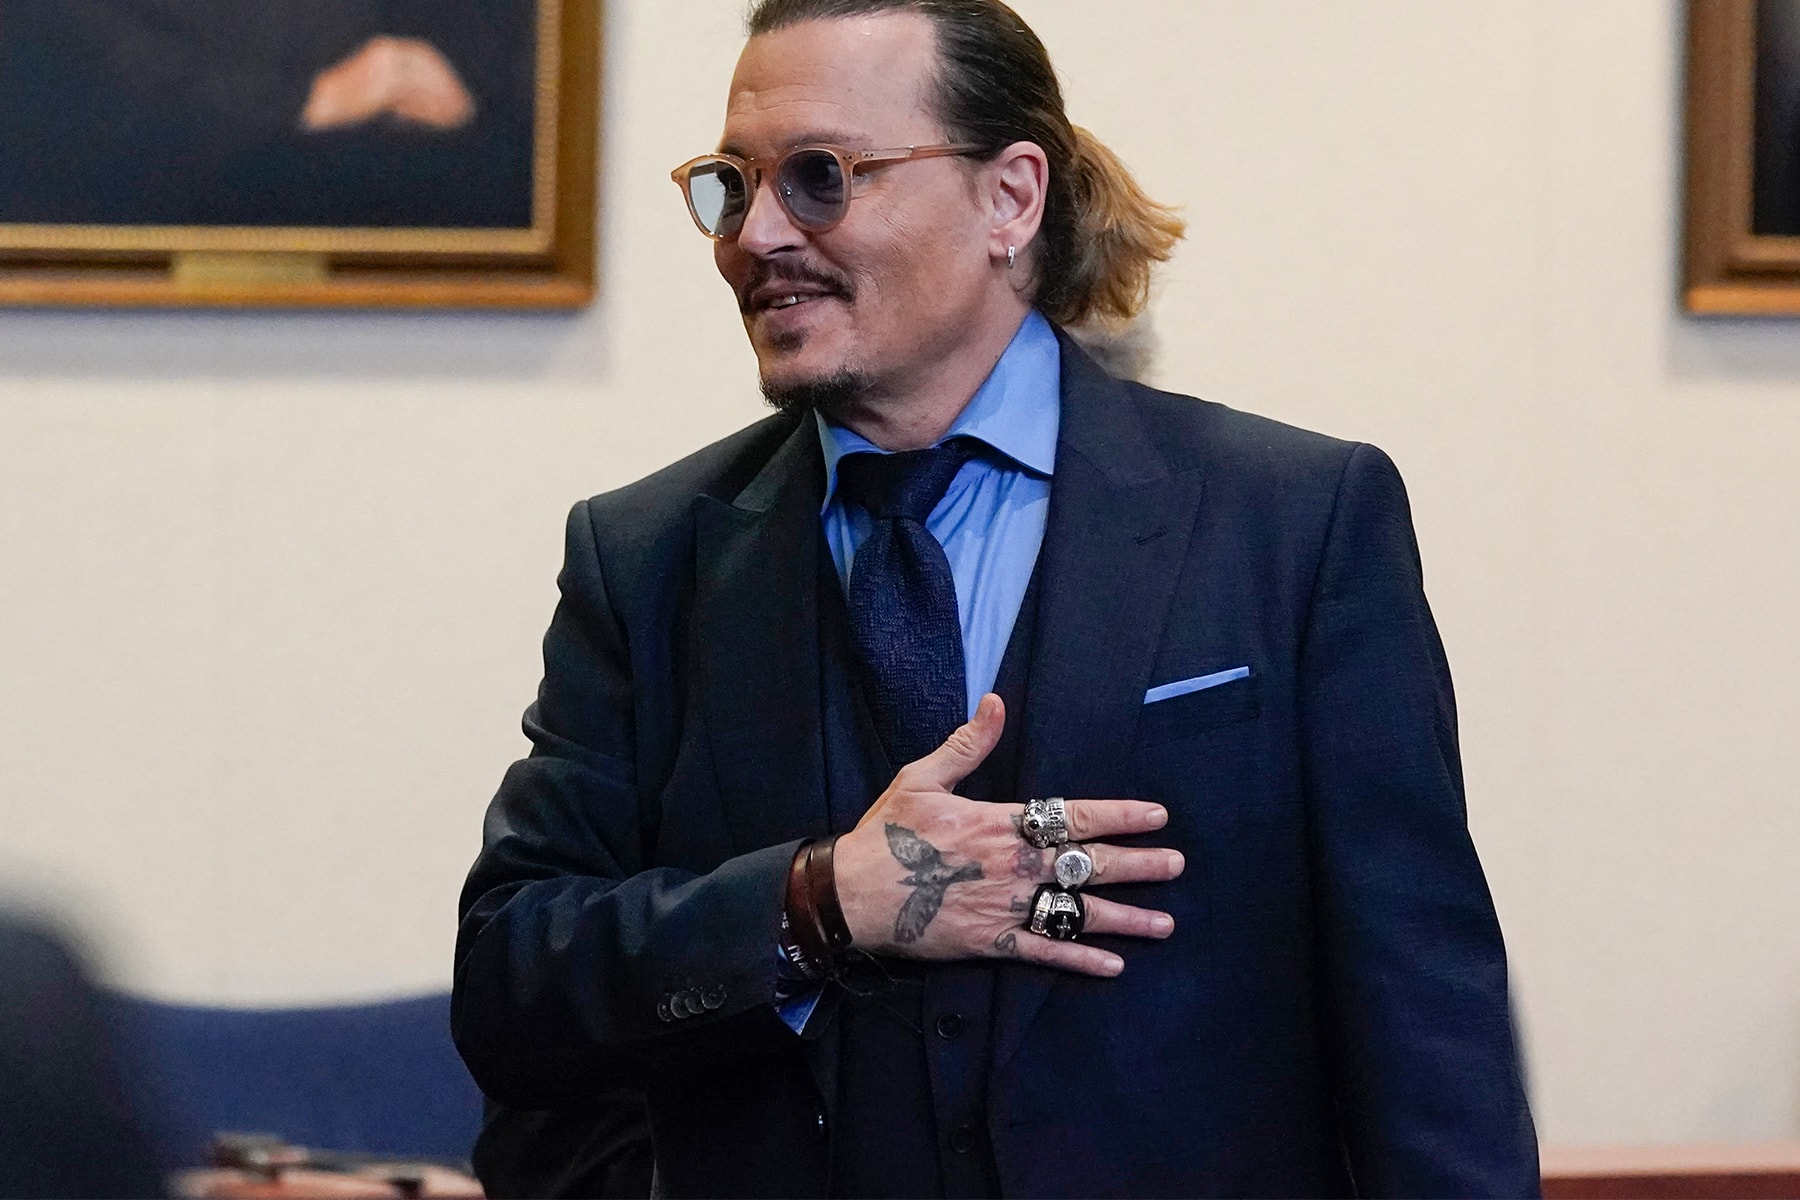 Johnny Depp v Amber Heard defamation case conclusion 